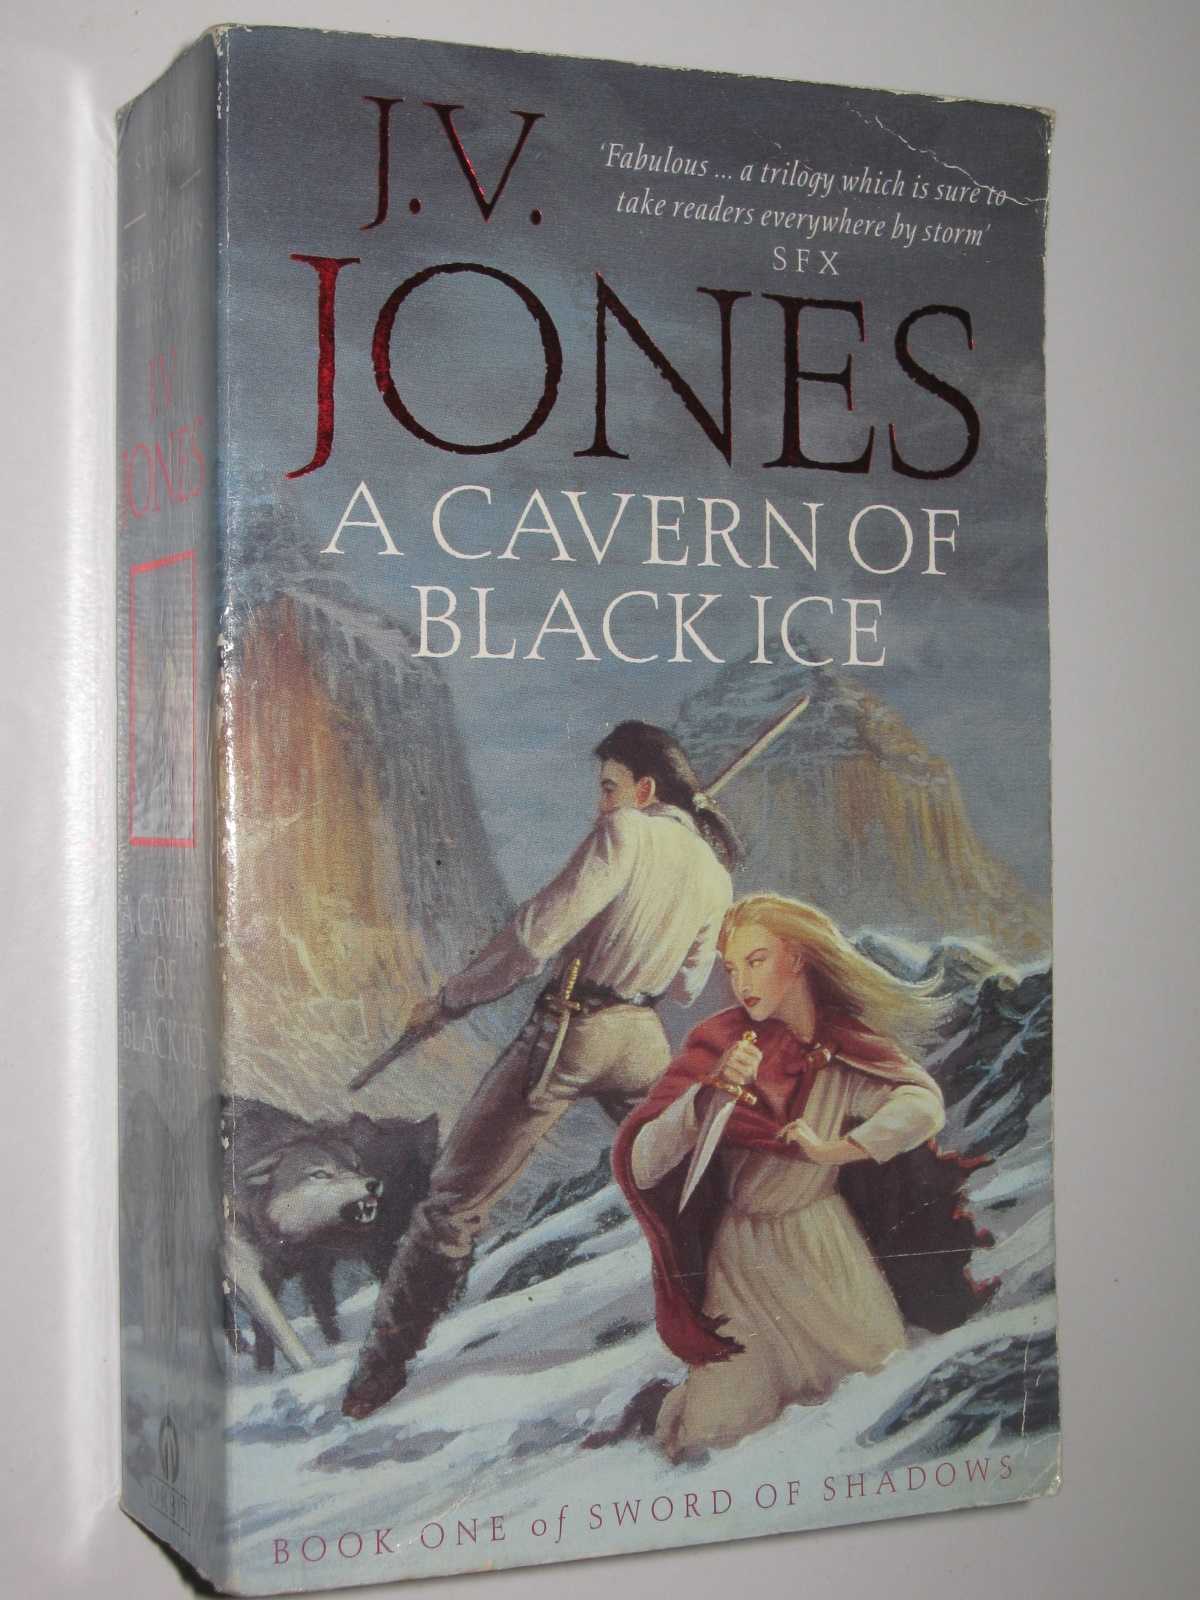 A Cavern of Black Ice by J.V. Jones